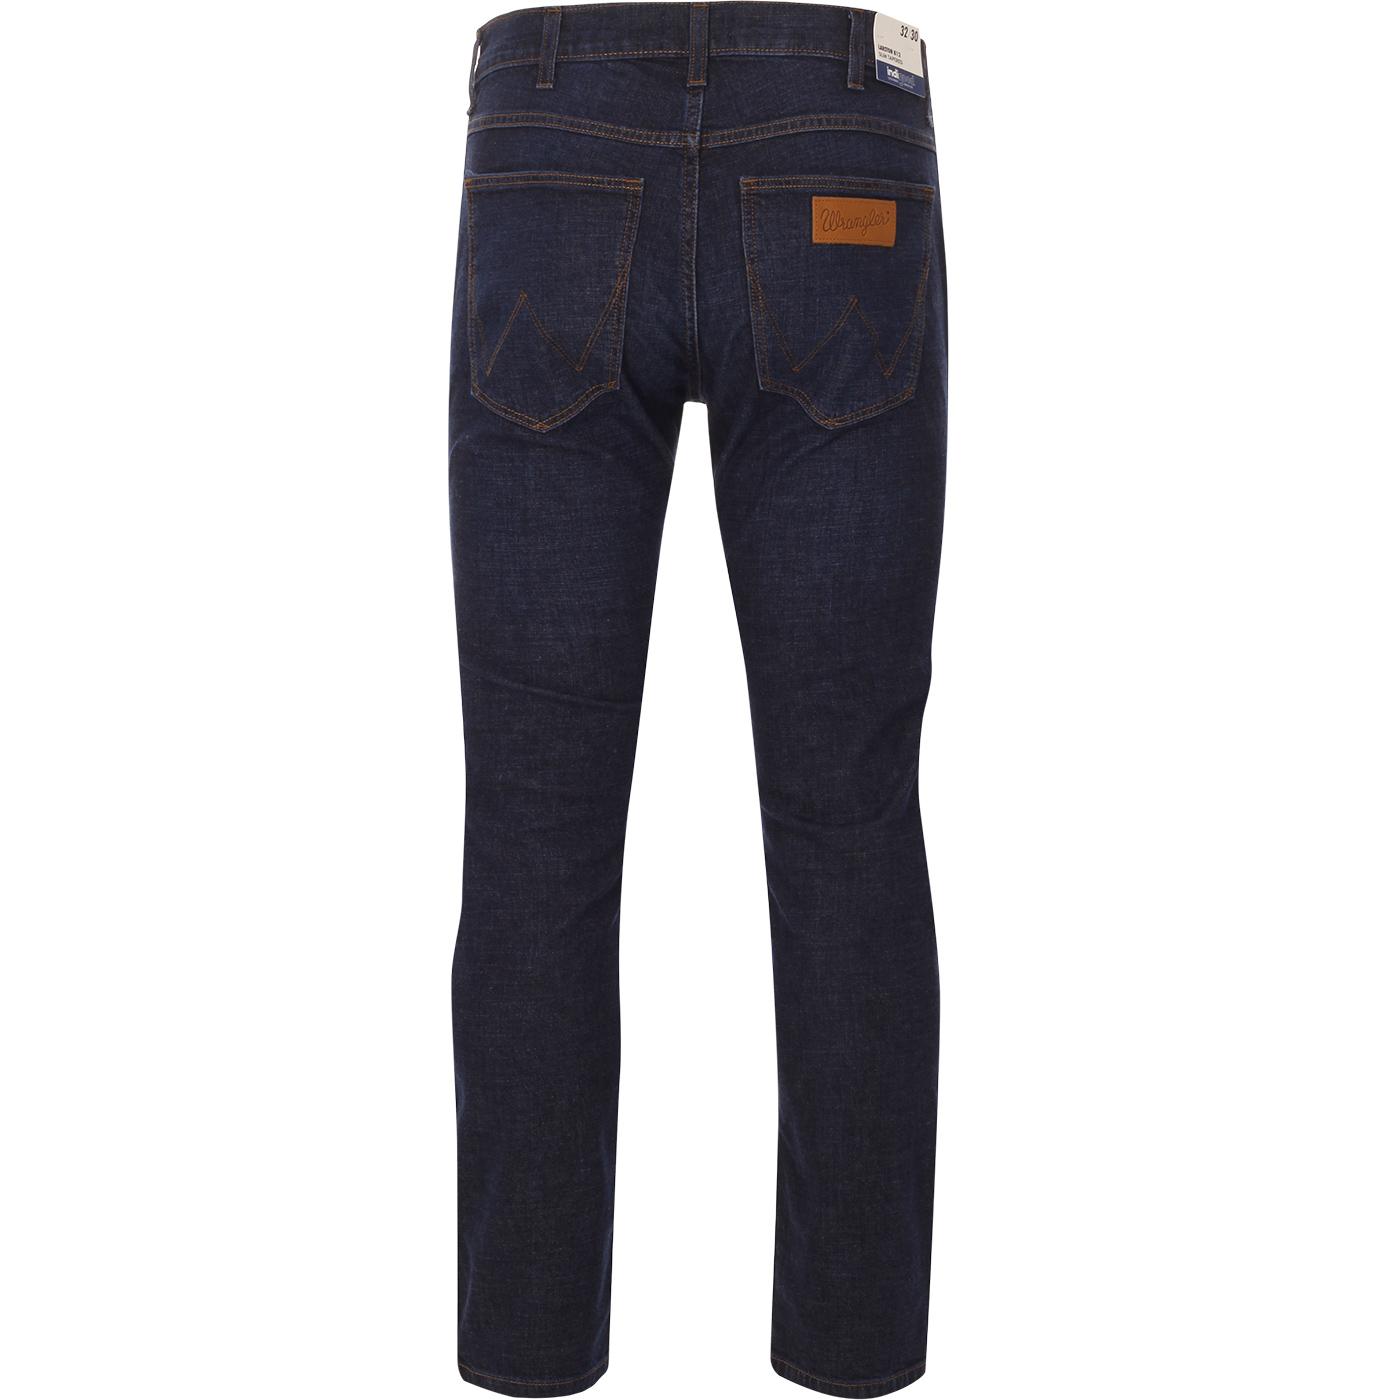 Larston WRANGLER Retro Indigood Jeans in Rinse & Shine